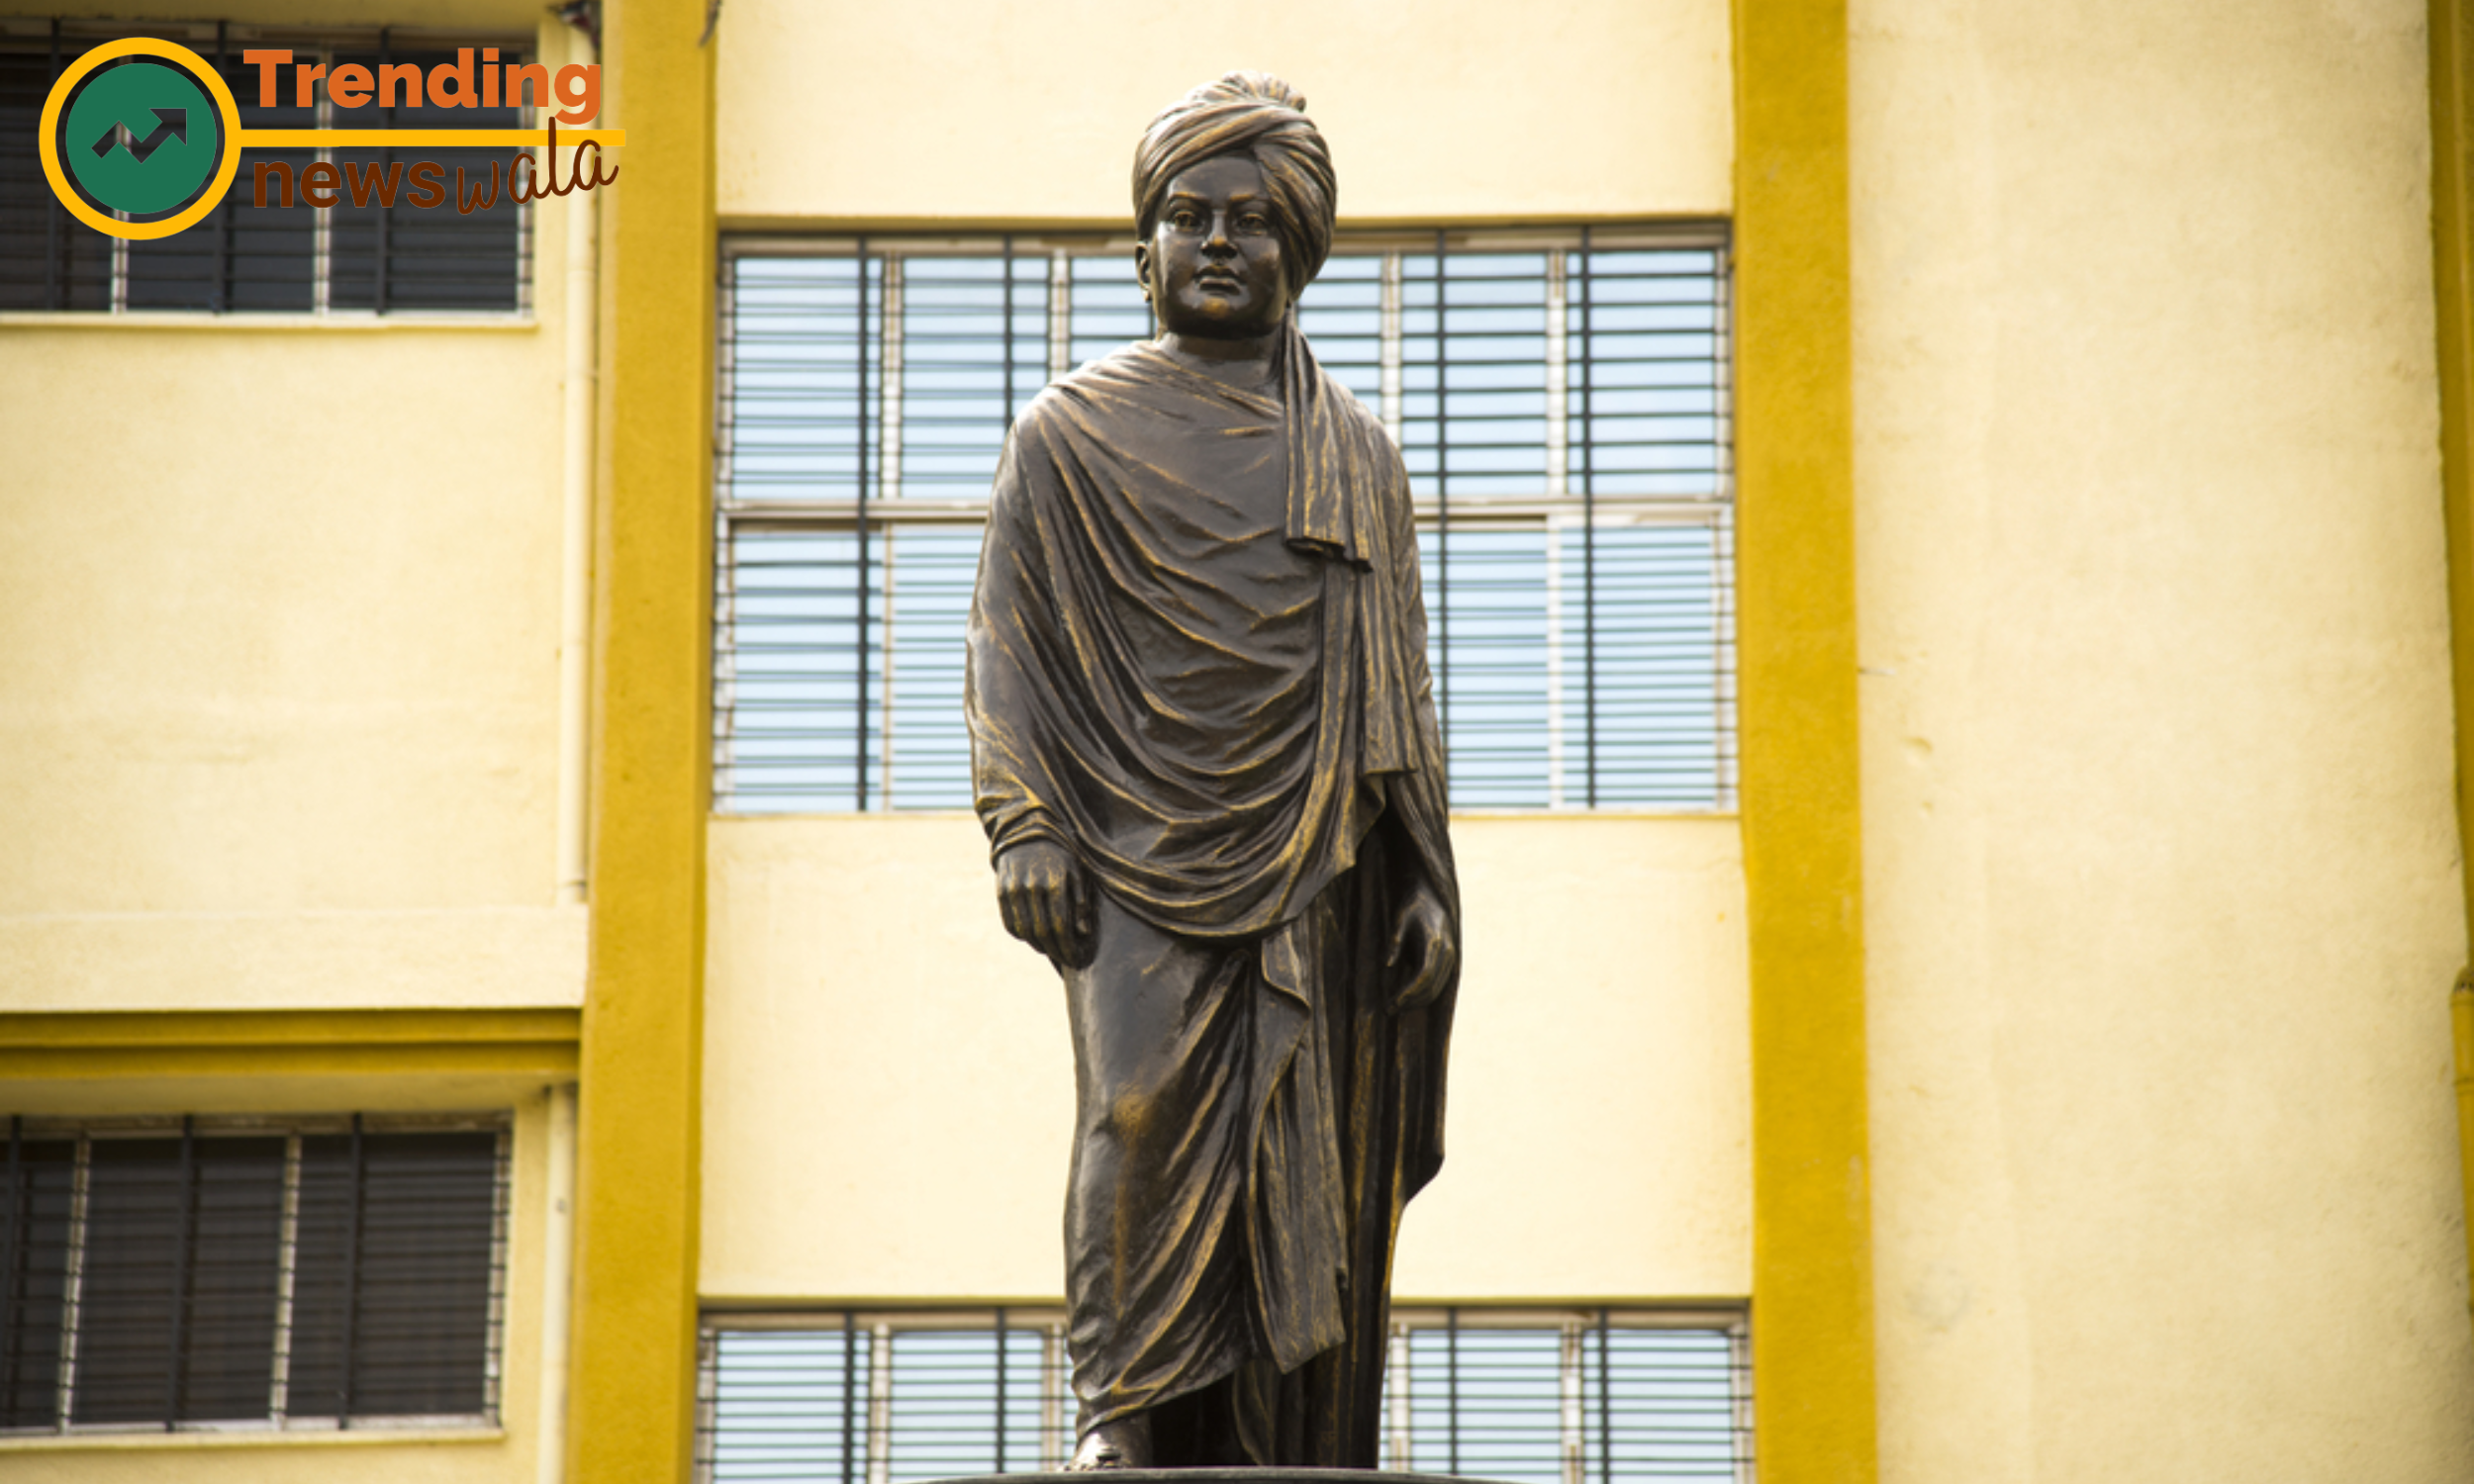 Swami Vivekananda's influence extends far beyond India